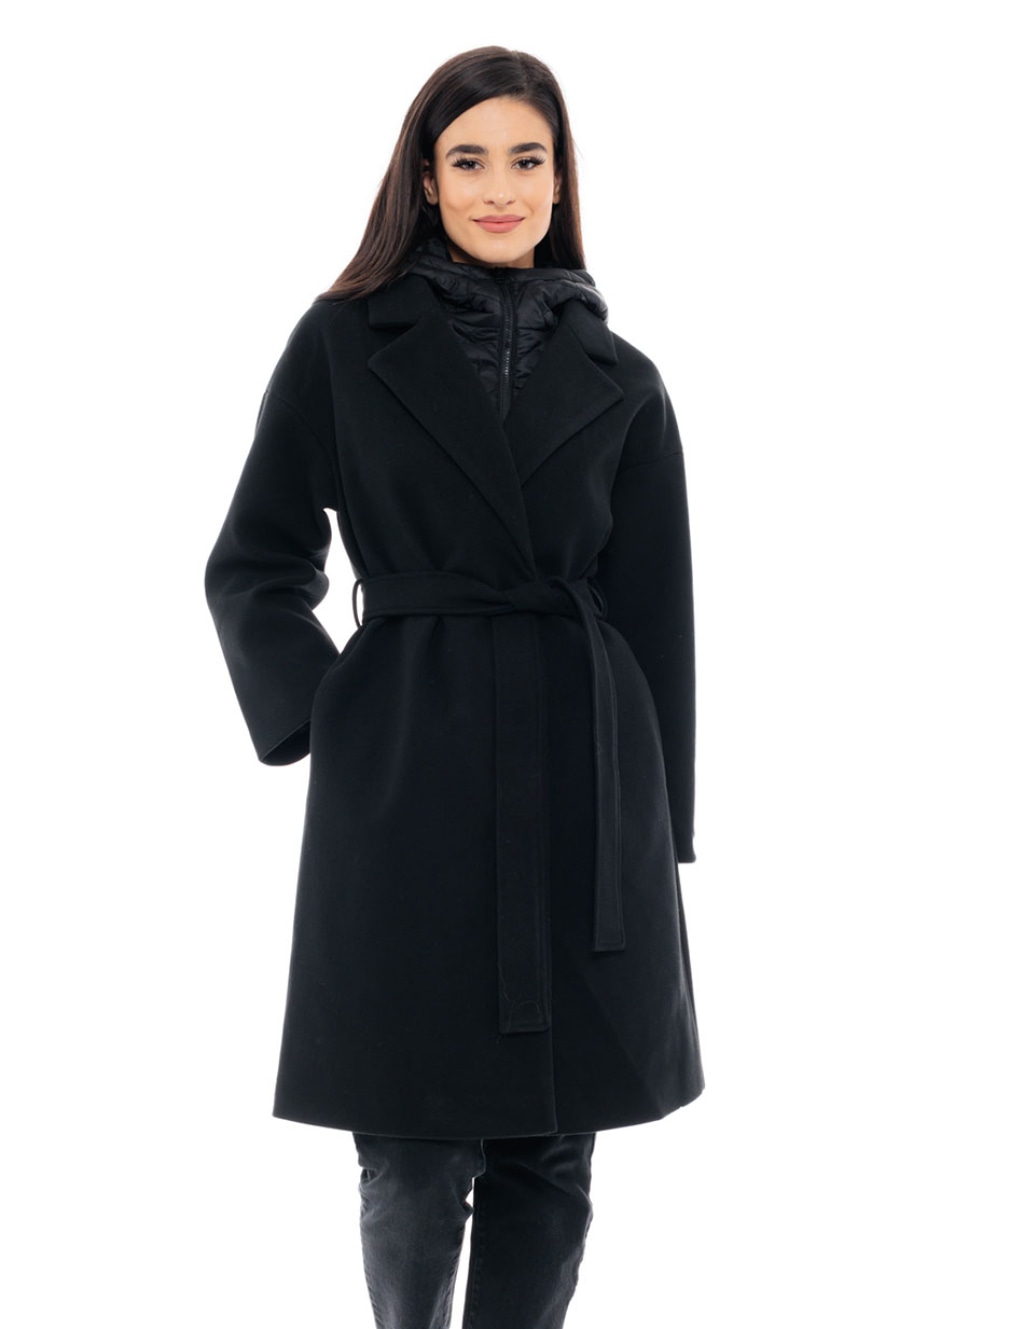 Splendid fashion γυναικείο μακρύ παλτό με κουκούλα ΜΑΥΡΟ 48-101-101-010-S